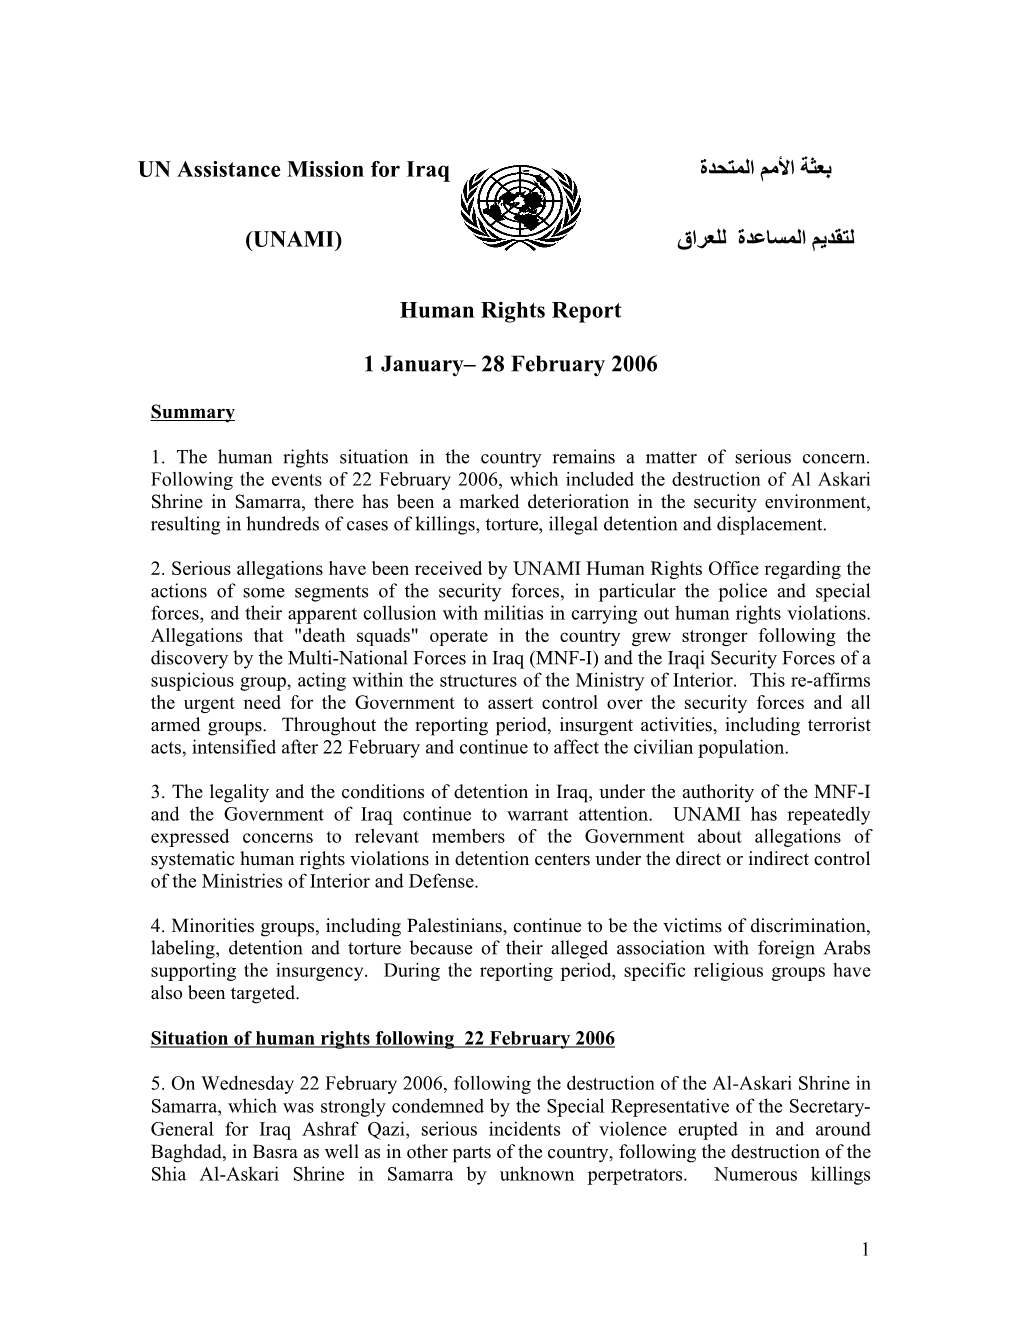 (UNAMI) Human Rights Report 1 January– 28 February 2006